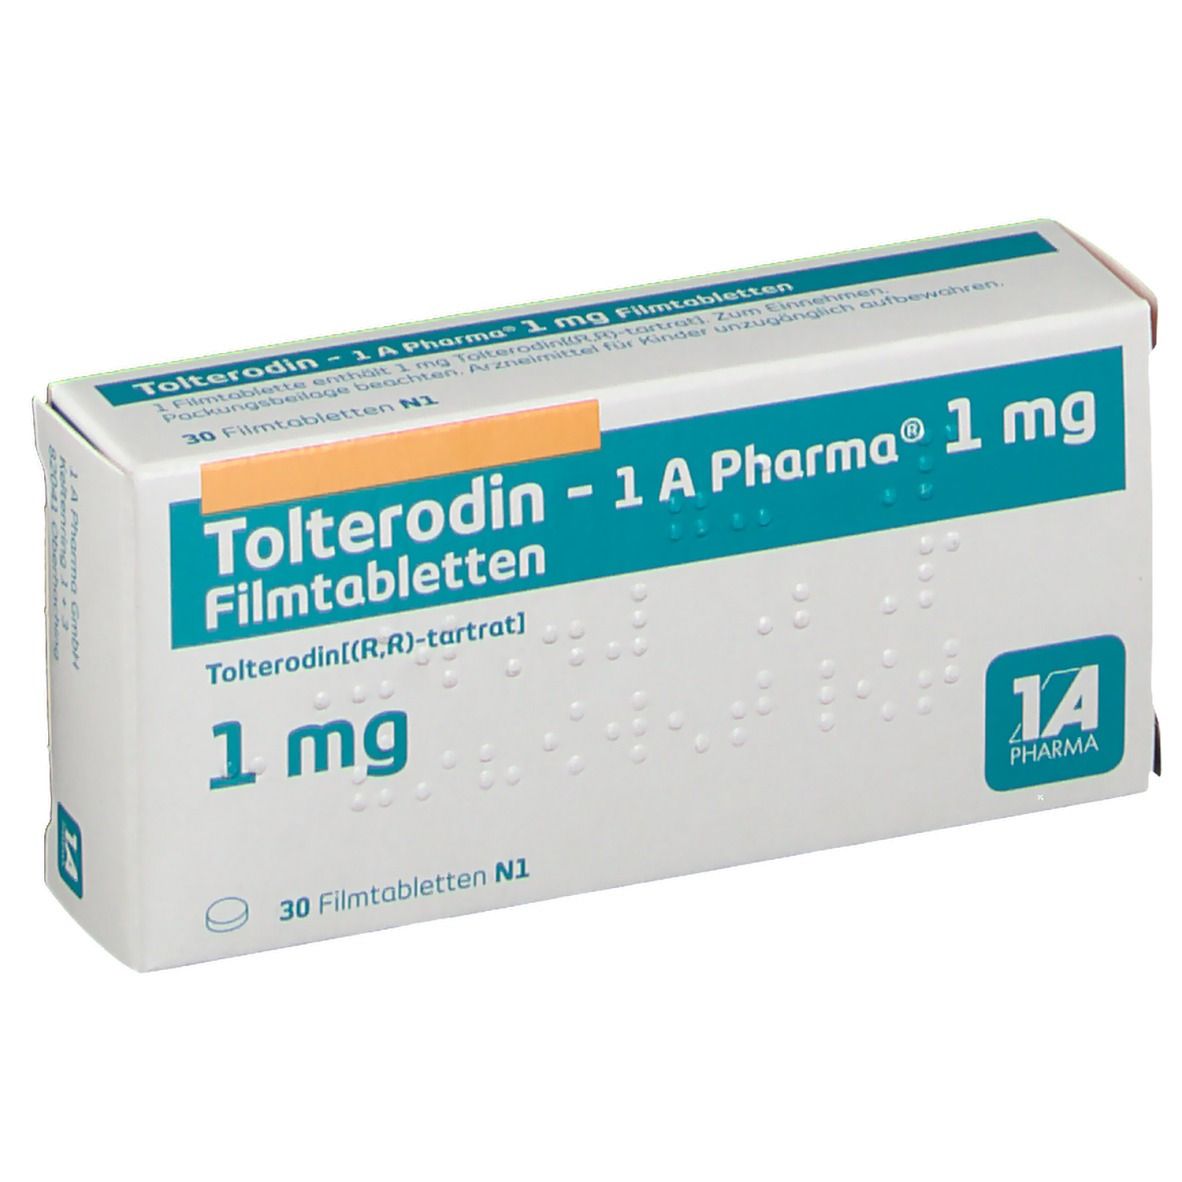 Tolterodin - 1 A Pharma® 1 mg